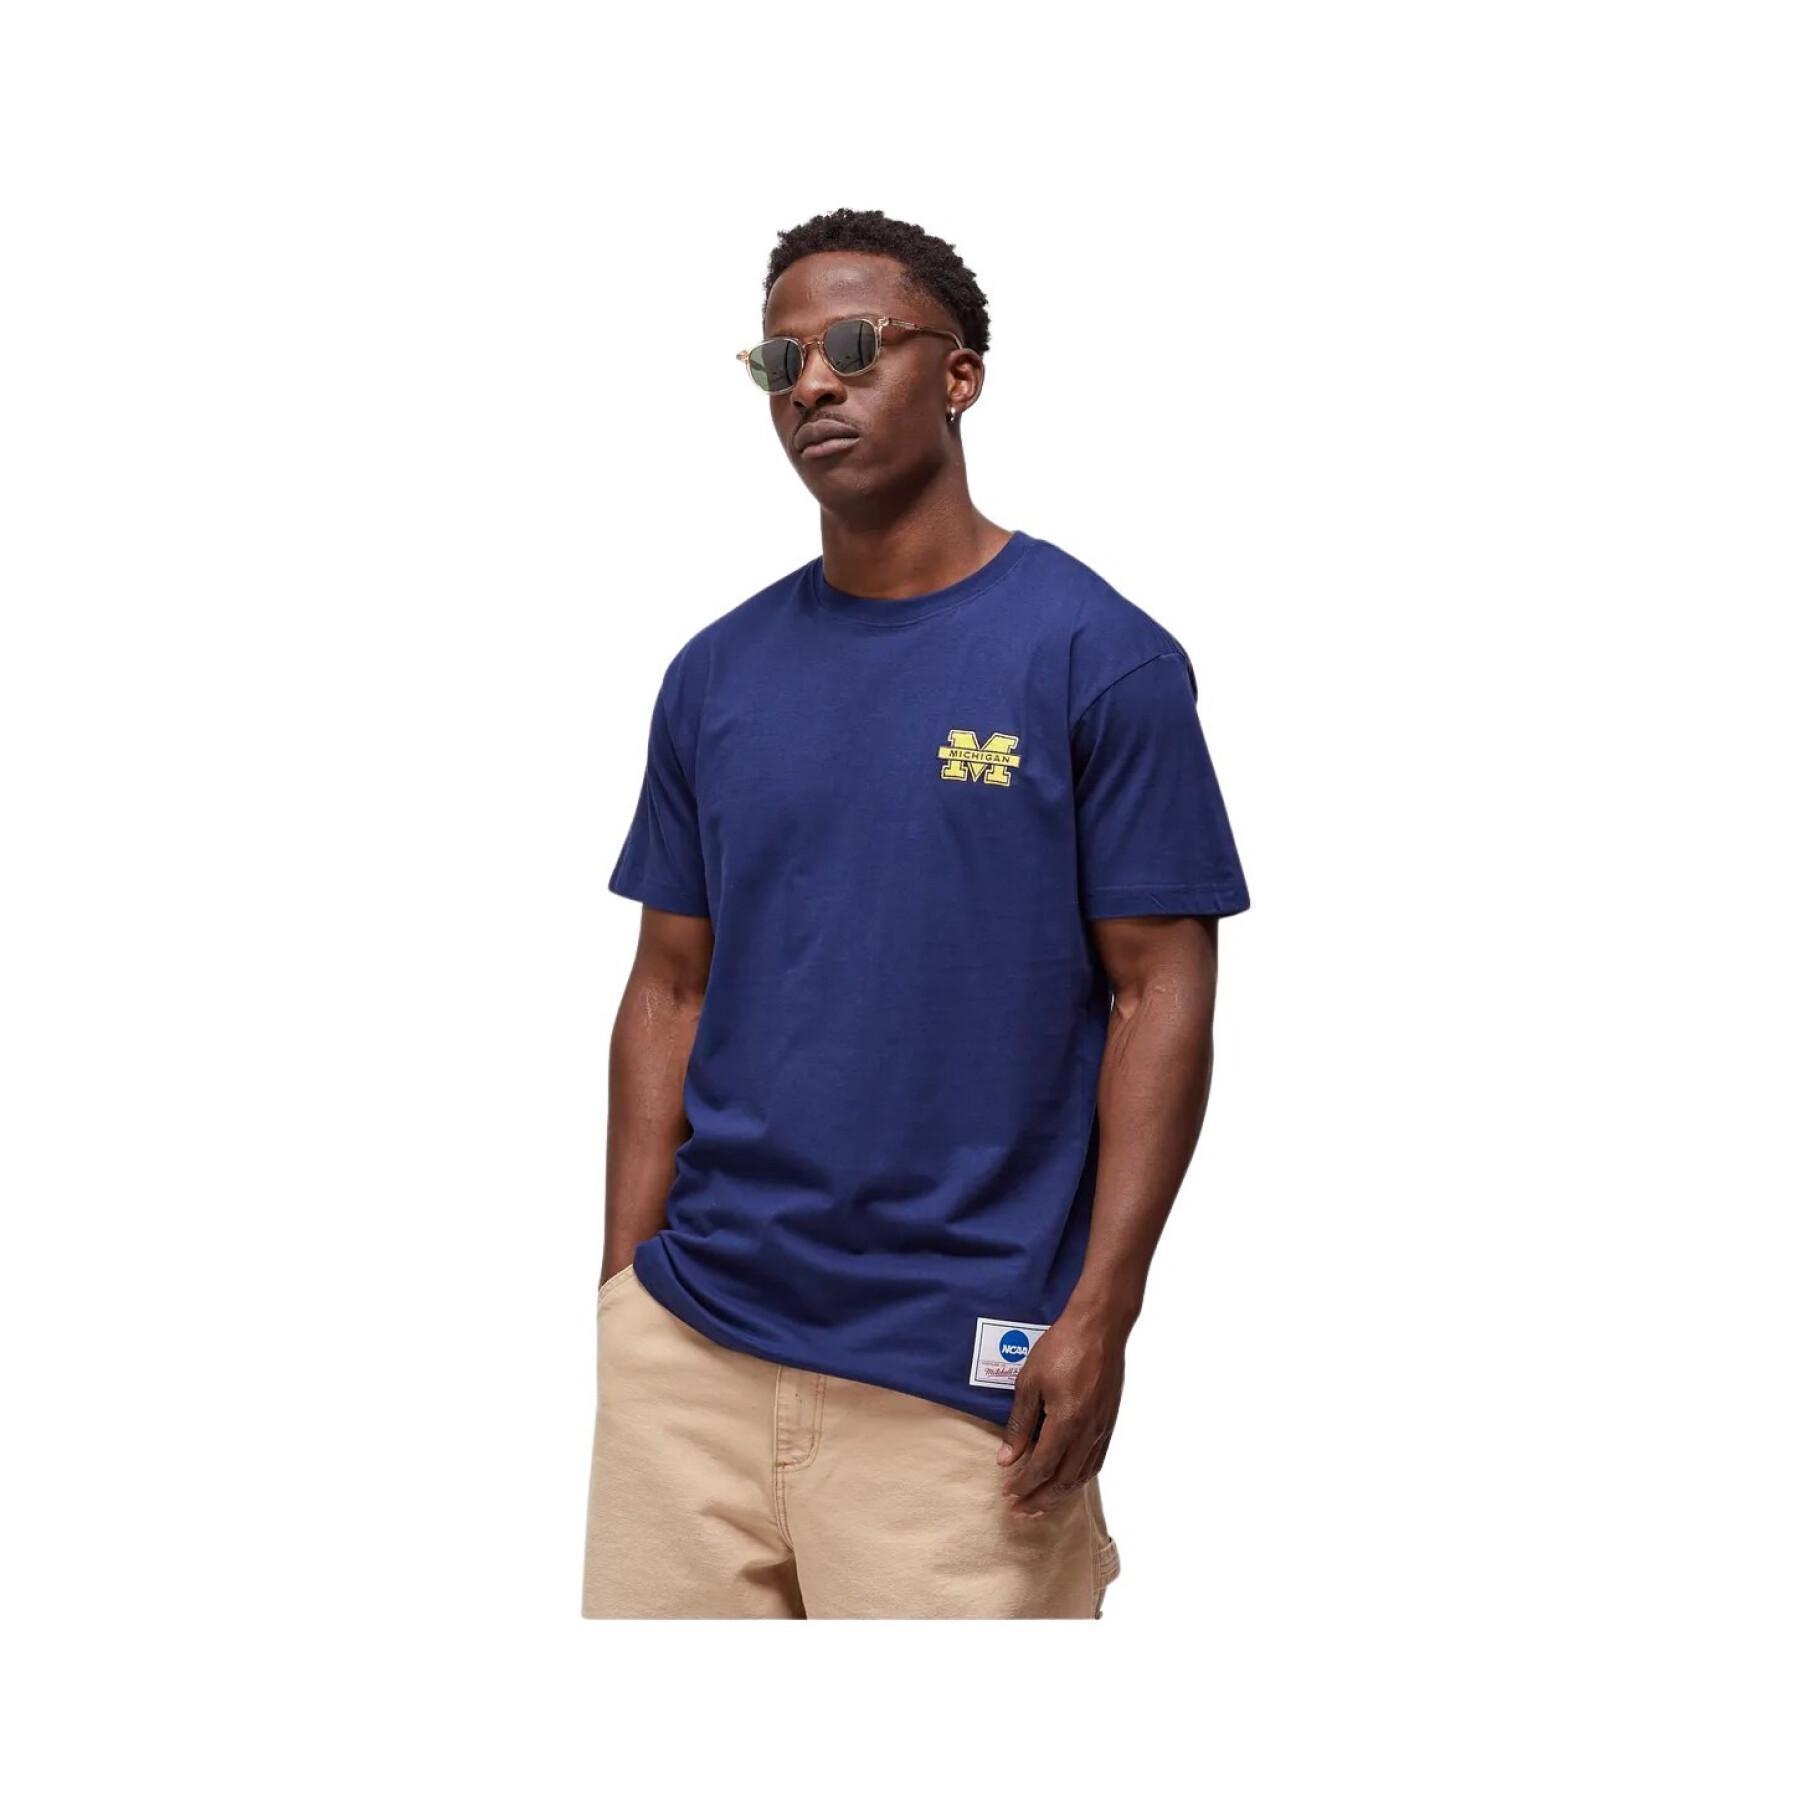 Camiseta Universidad de Michigan logo bordado